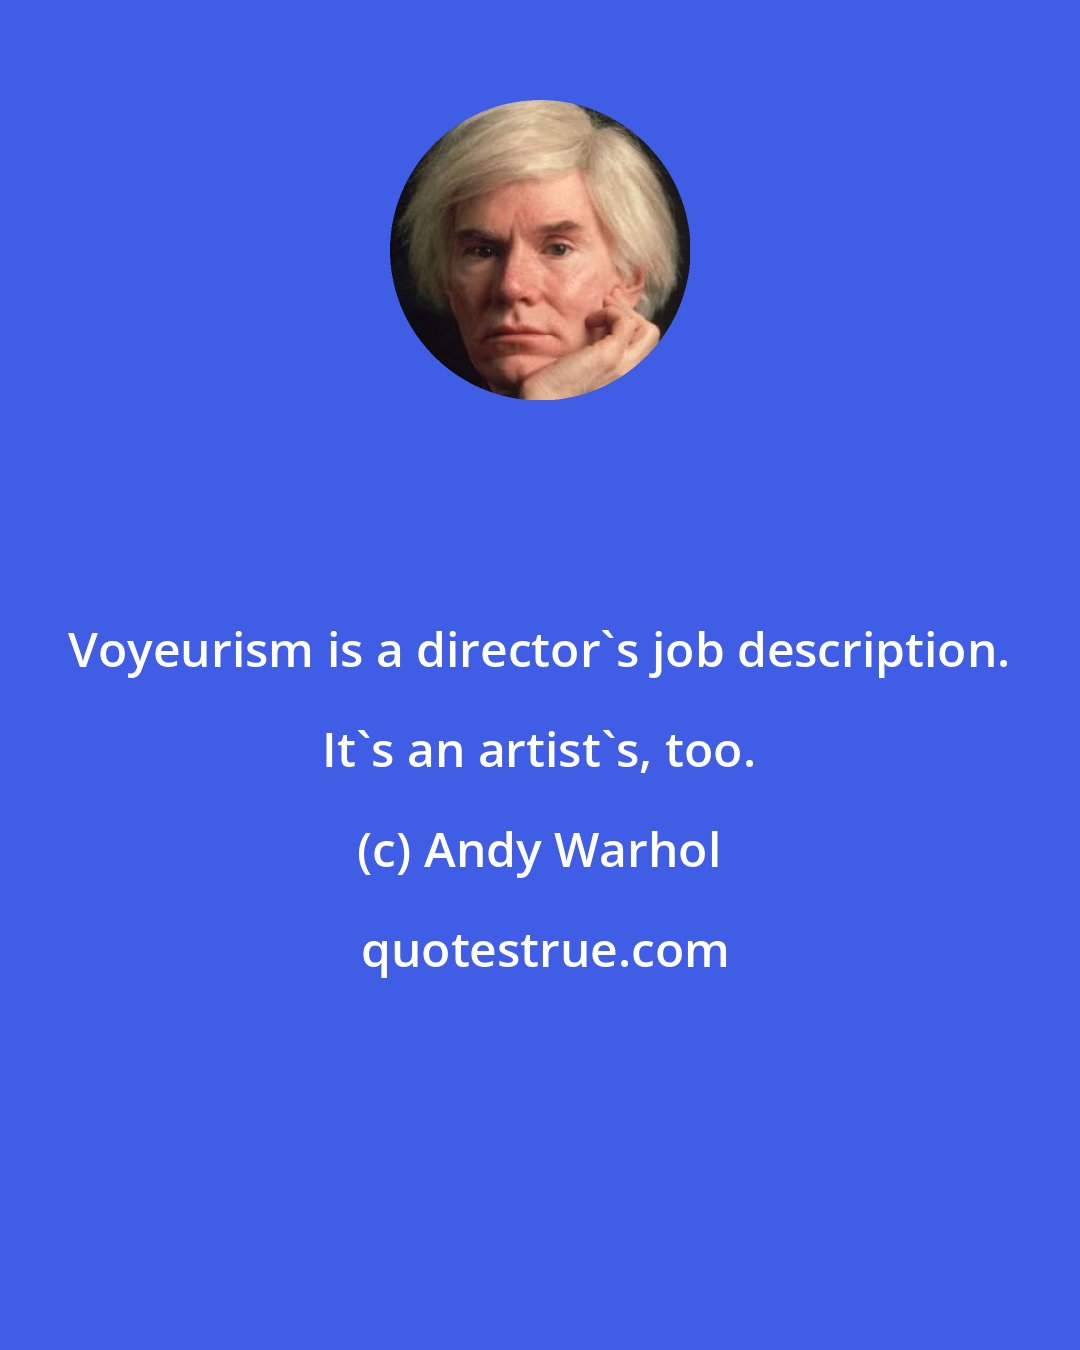 Andy Warhol: Voyeurism is a director's job description. It's an artist's, too.